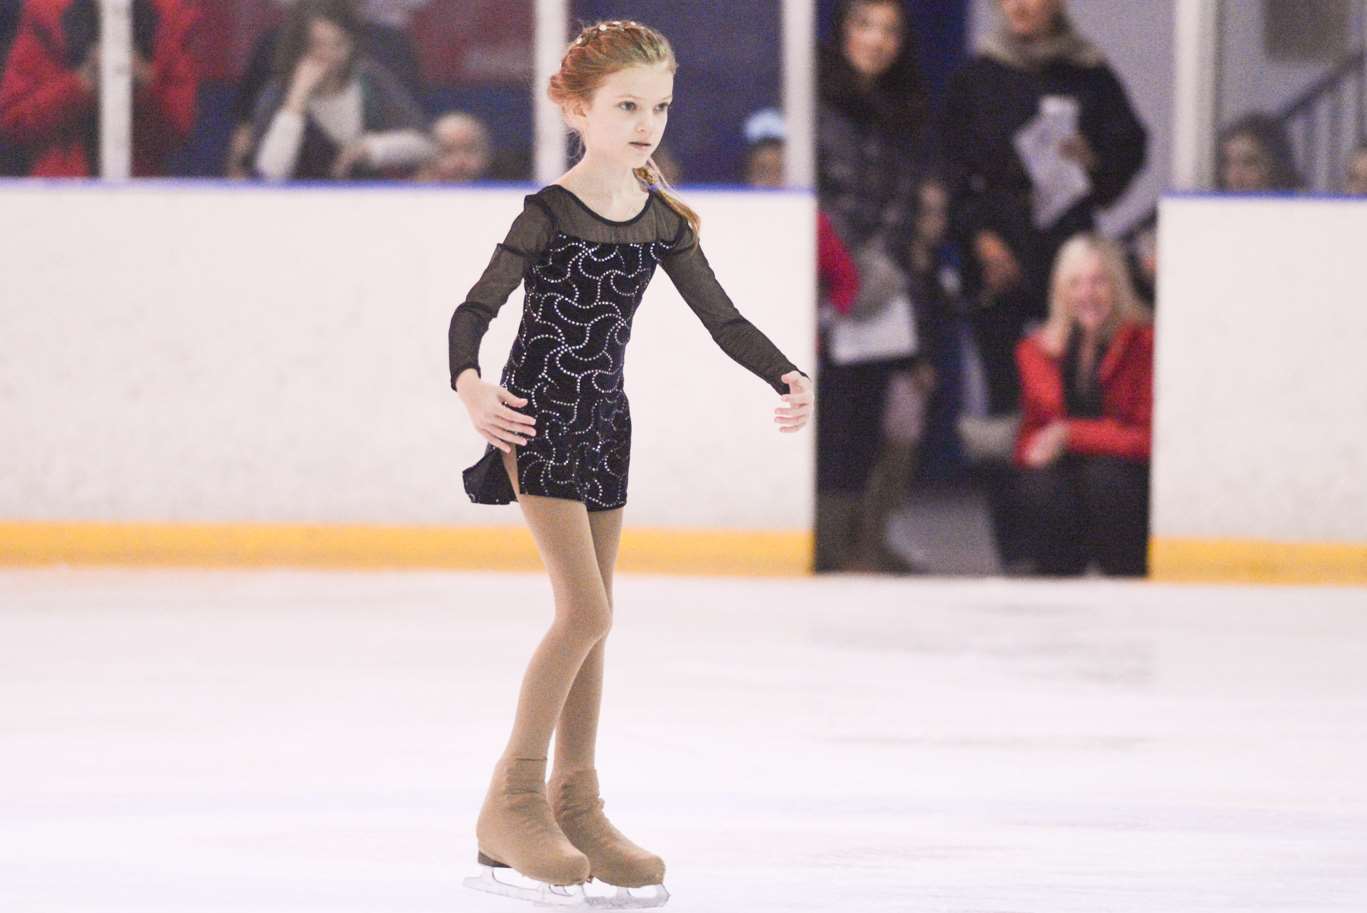 Annabelle Higgins ice skating